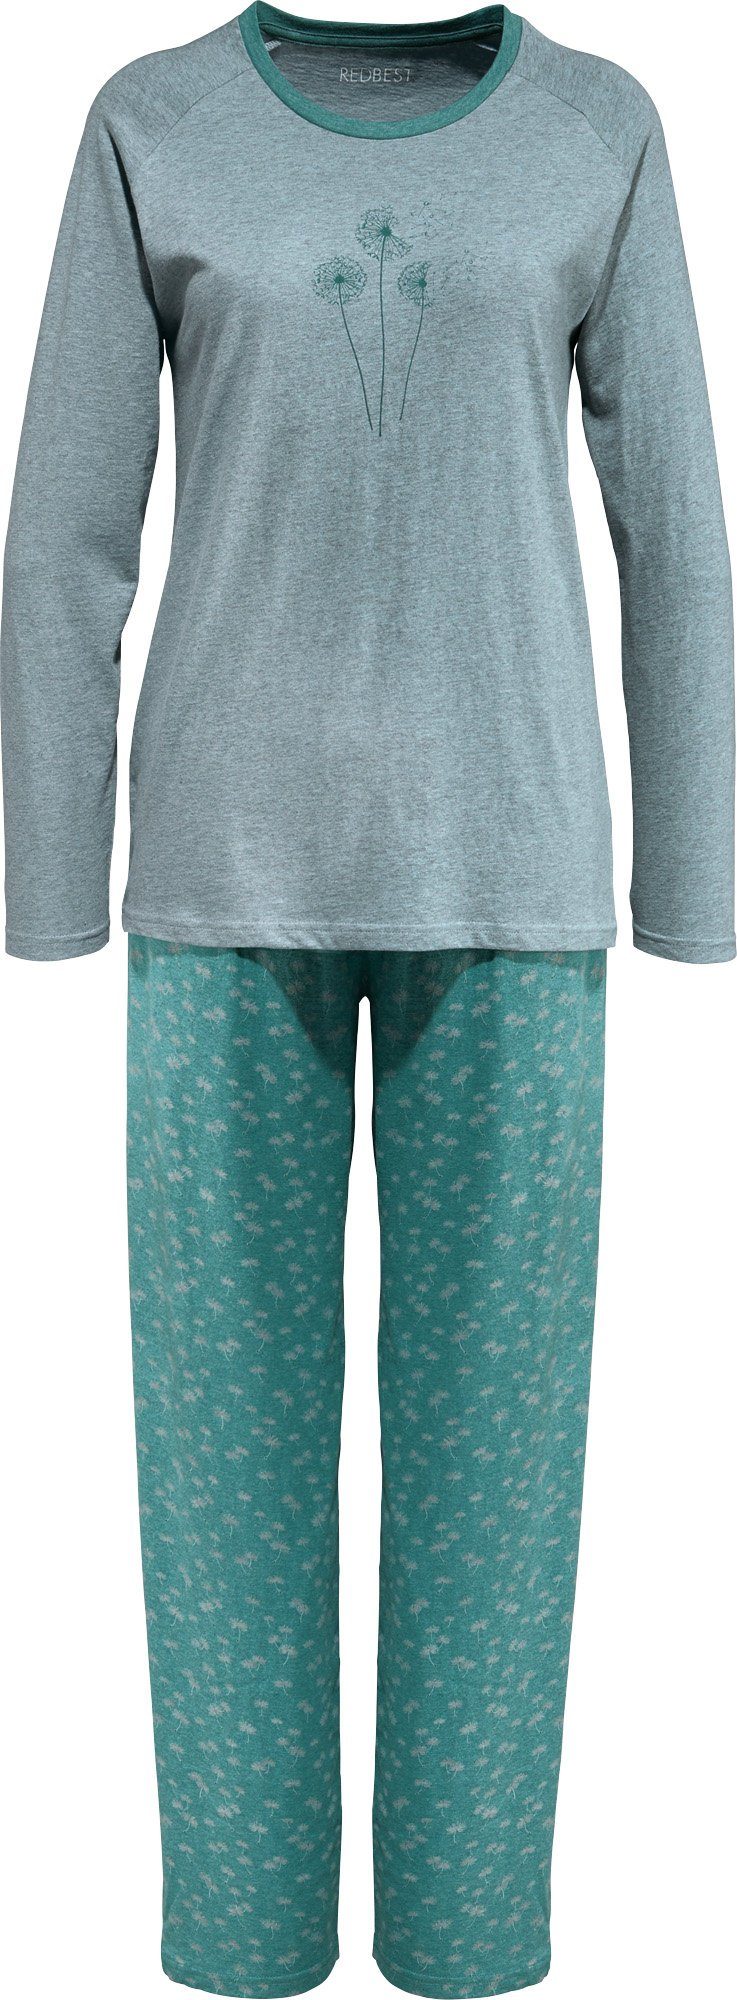 REDBEST Pyjama Damen-Schlafanzug Blumen Single-Jersey